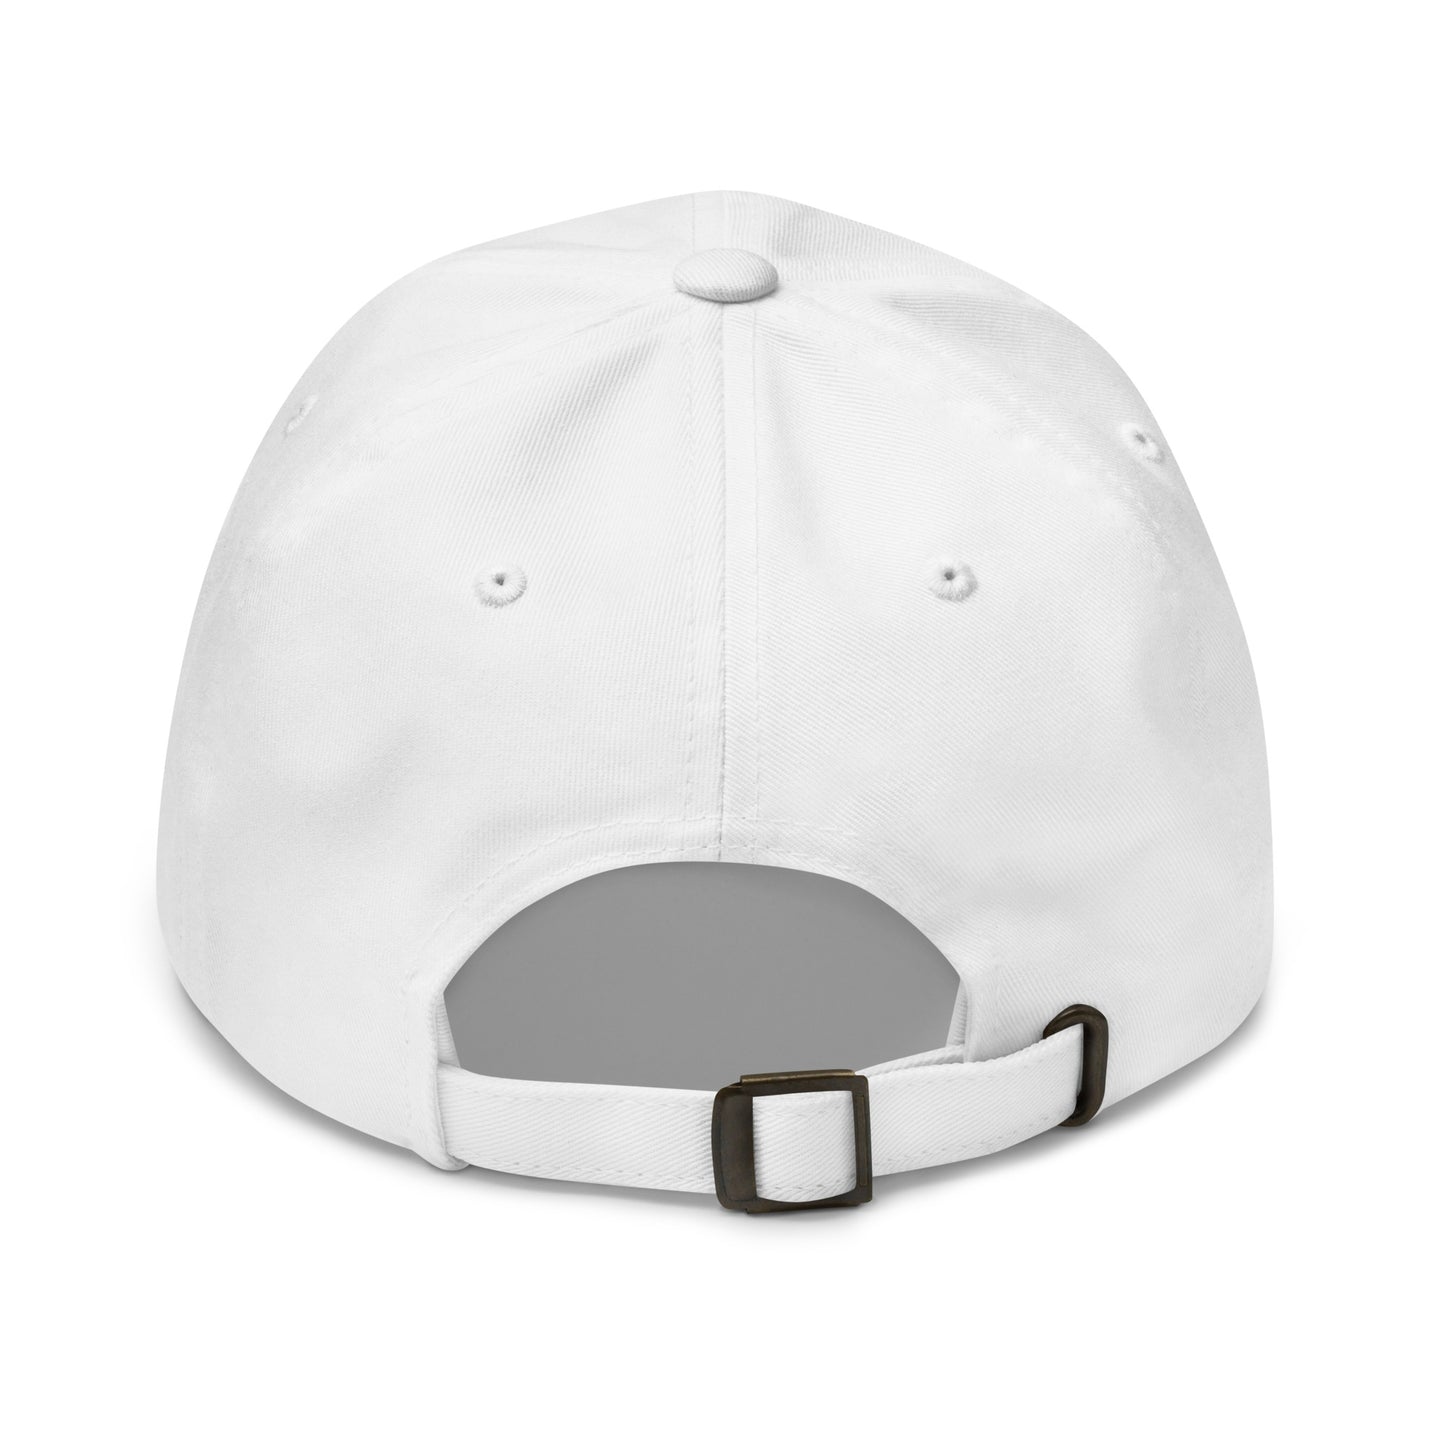 JetPunk Embroidered Baseball Cap